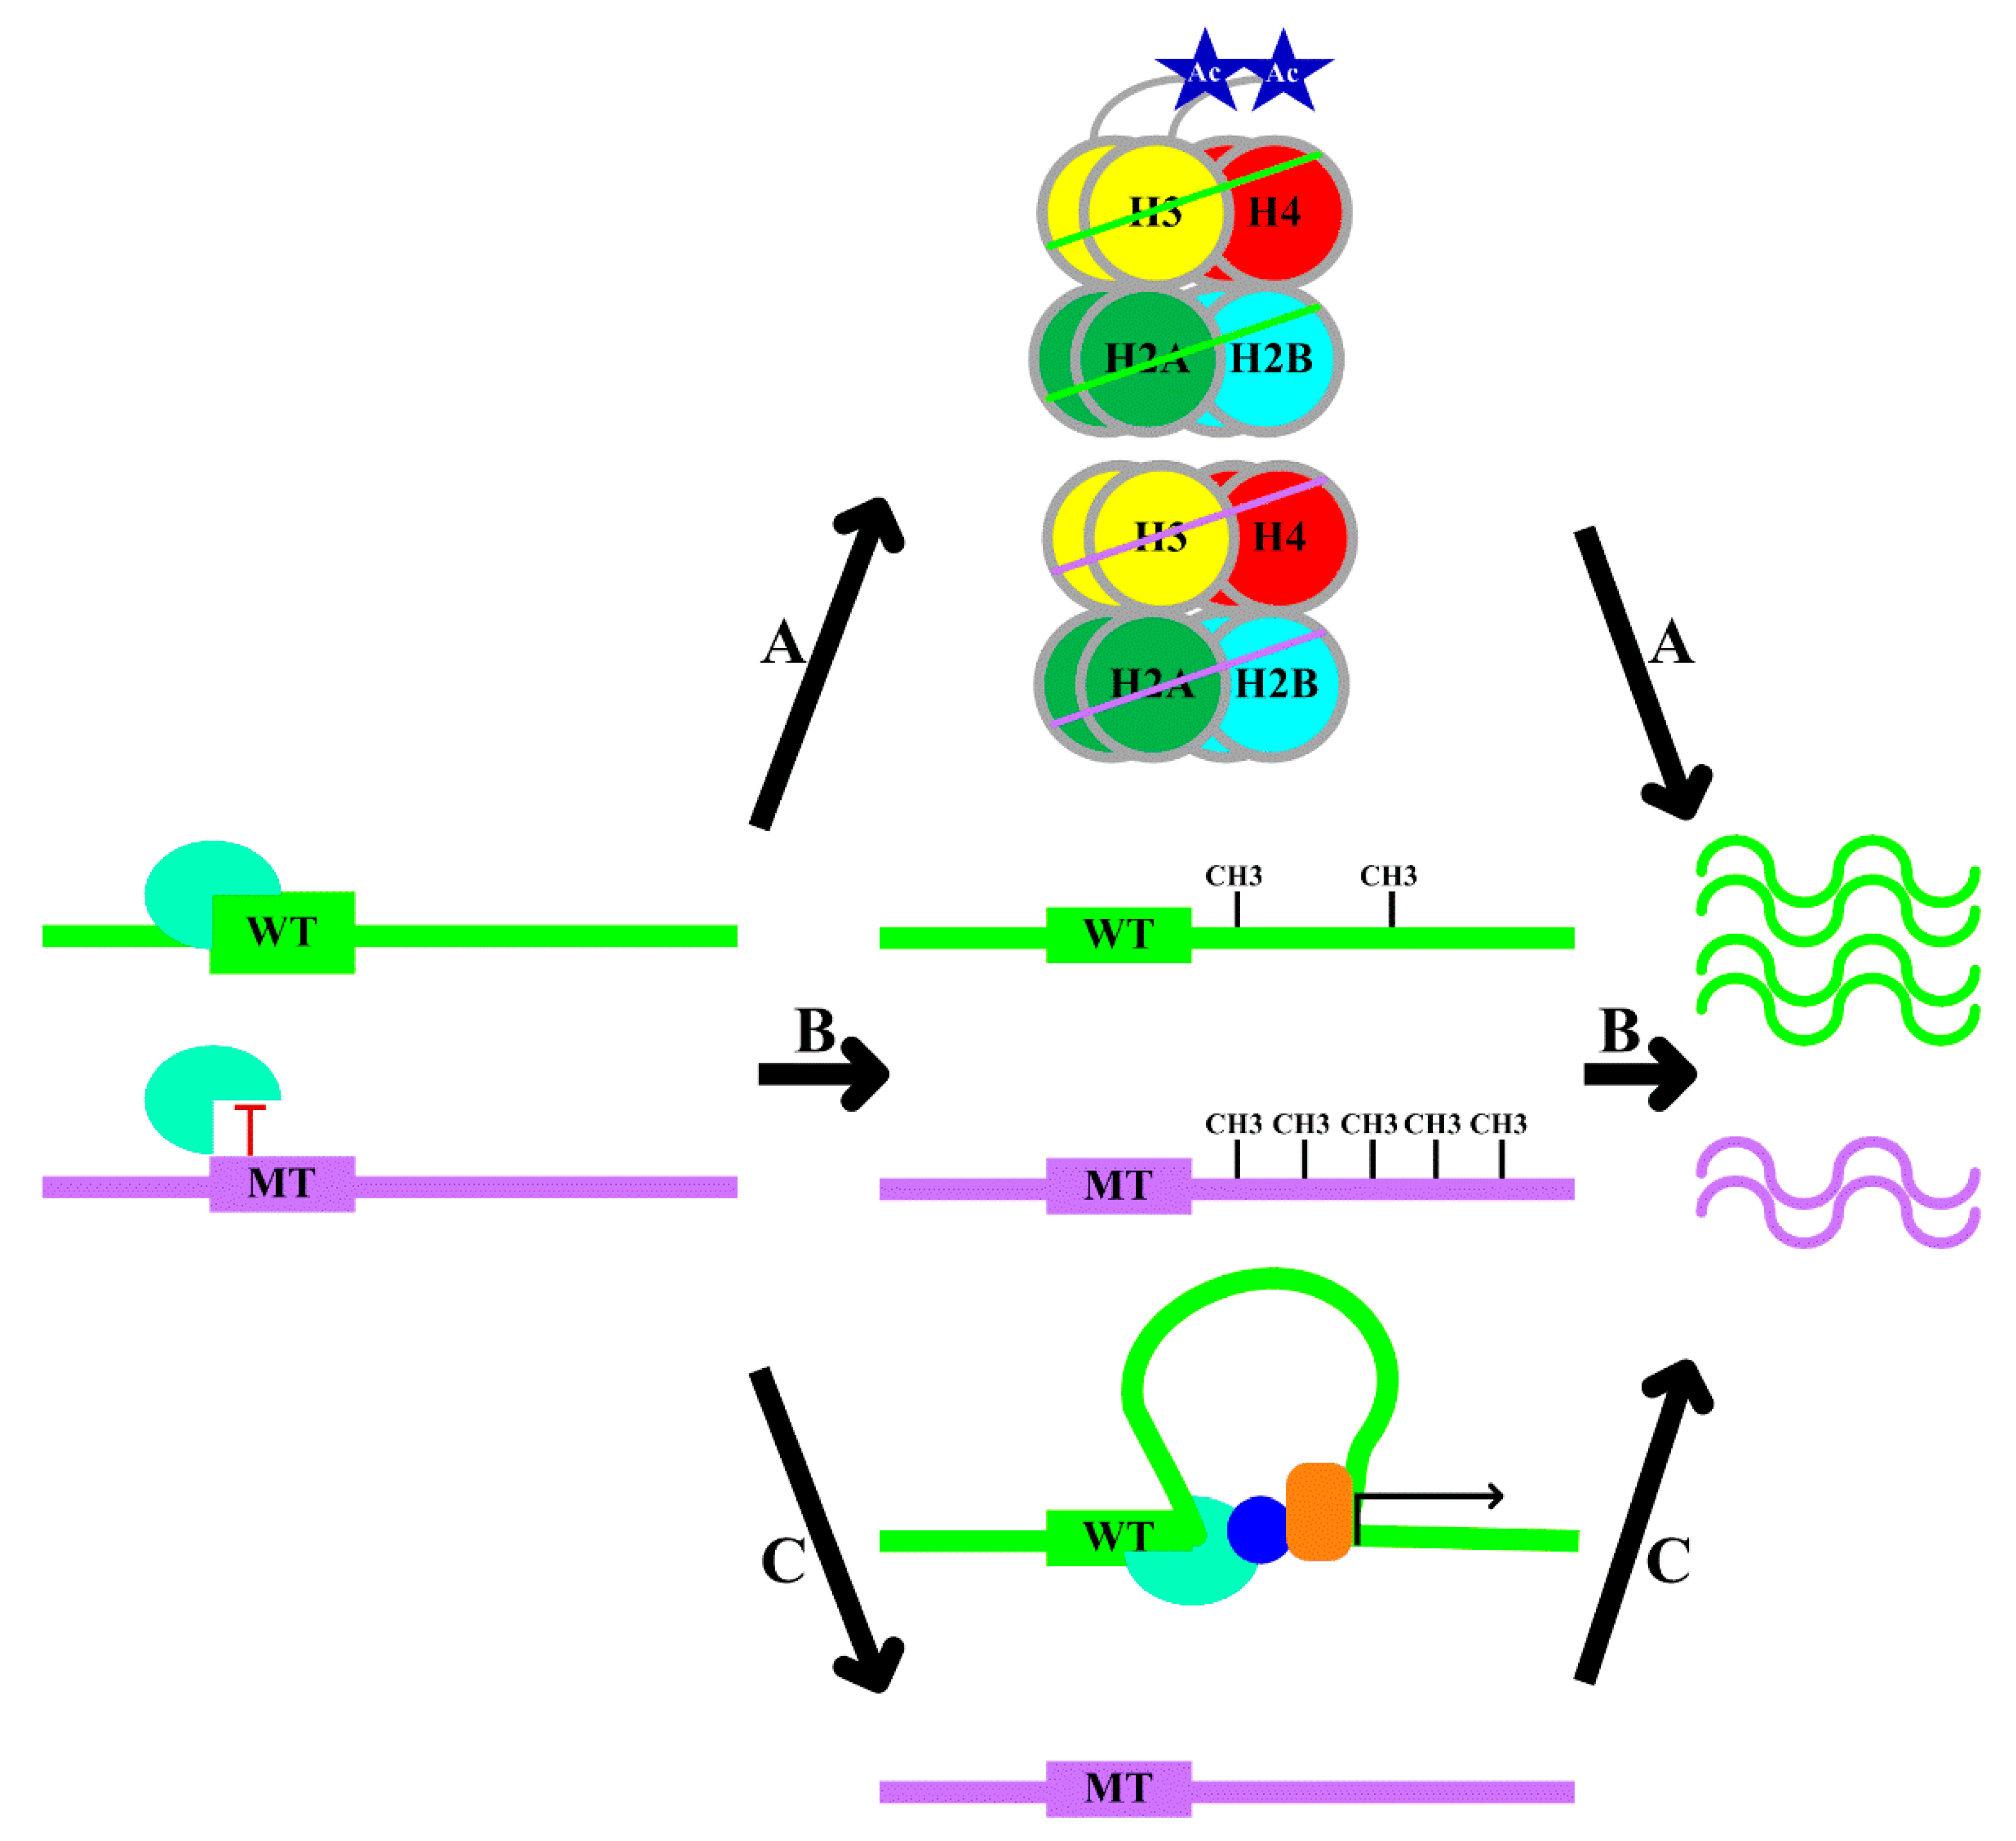 Modeling methyl-sensitive transcription factor motifs with an